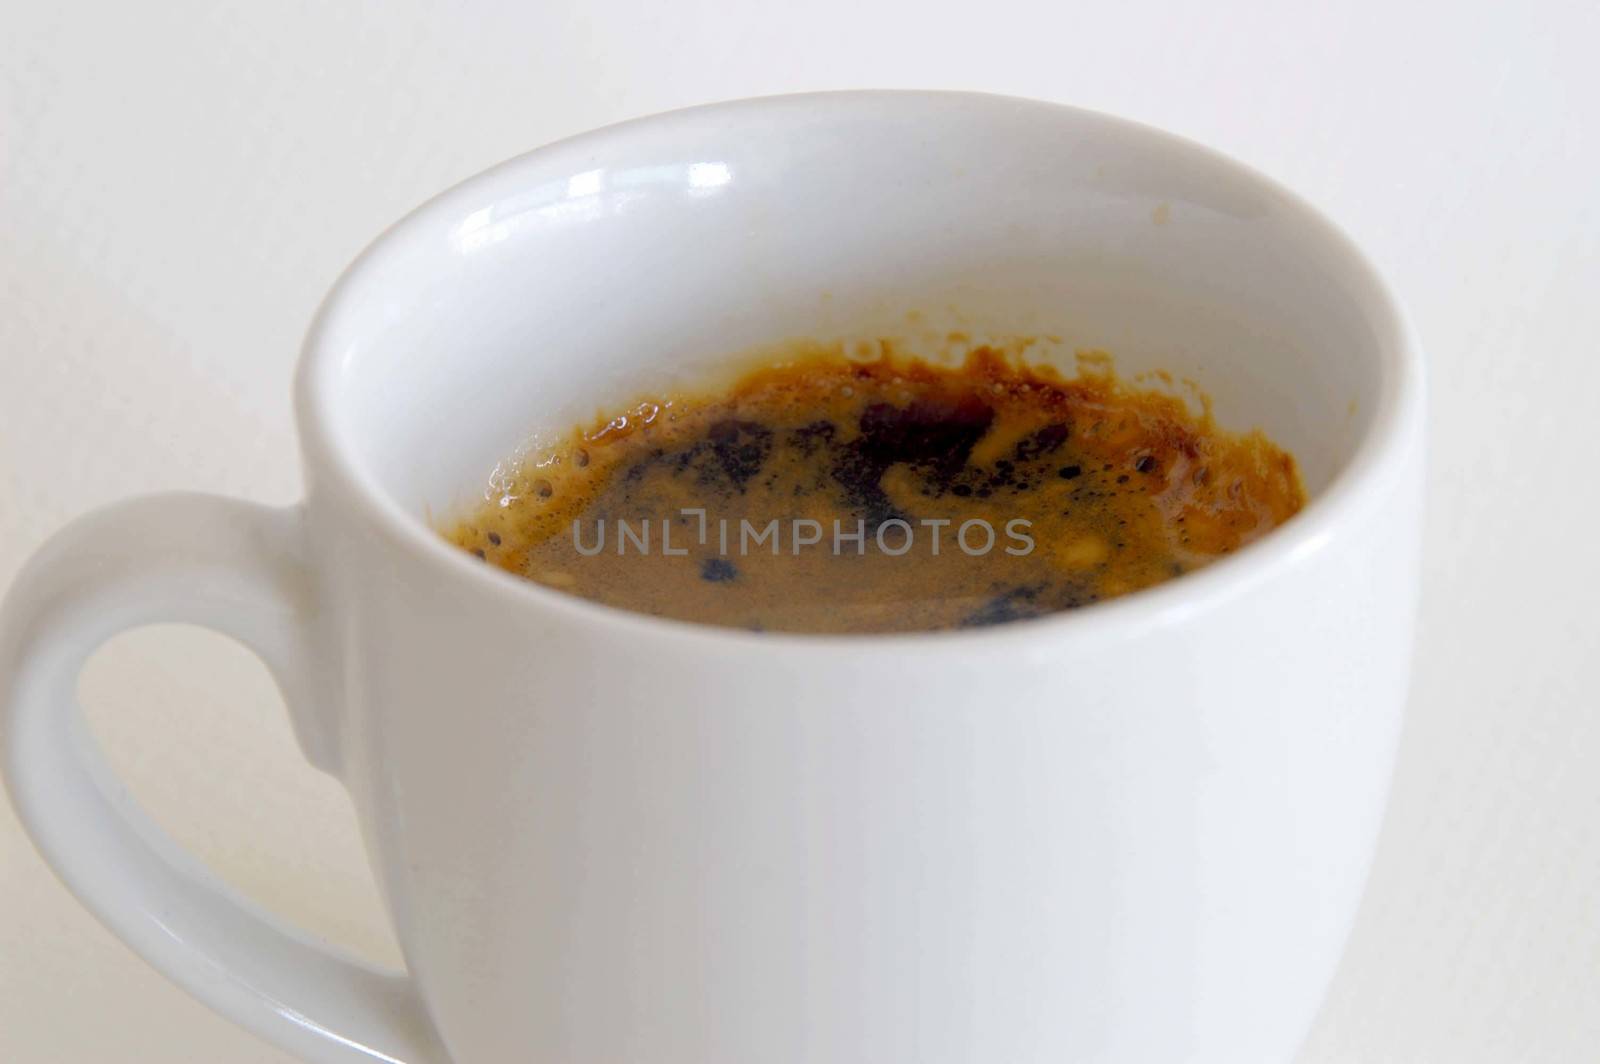 Coffee cup by javax